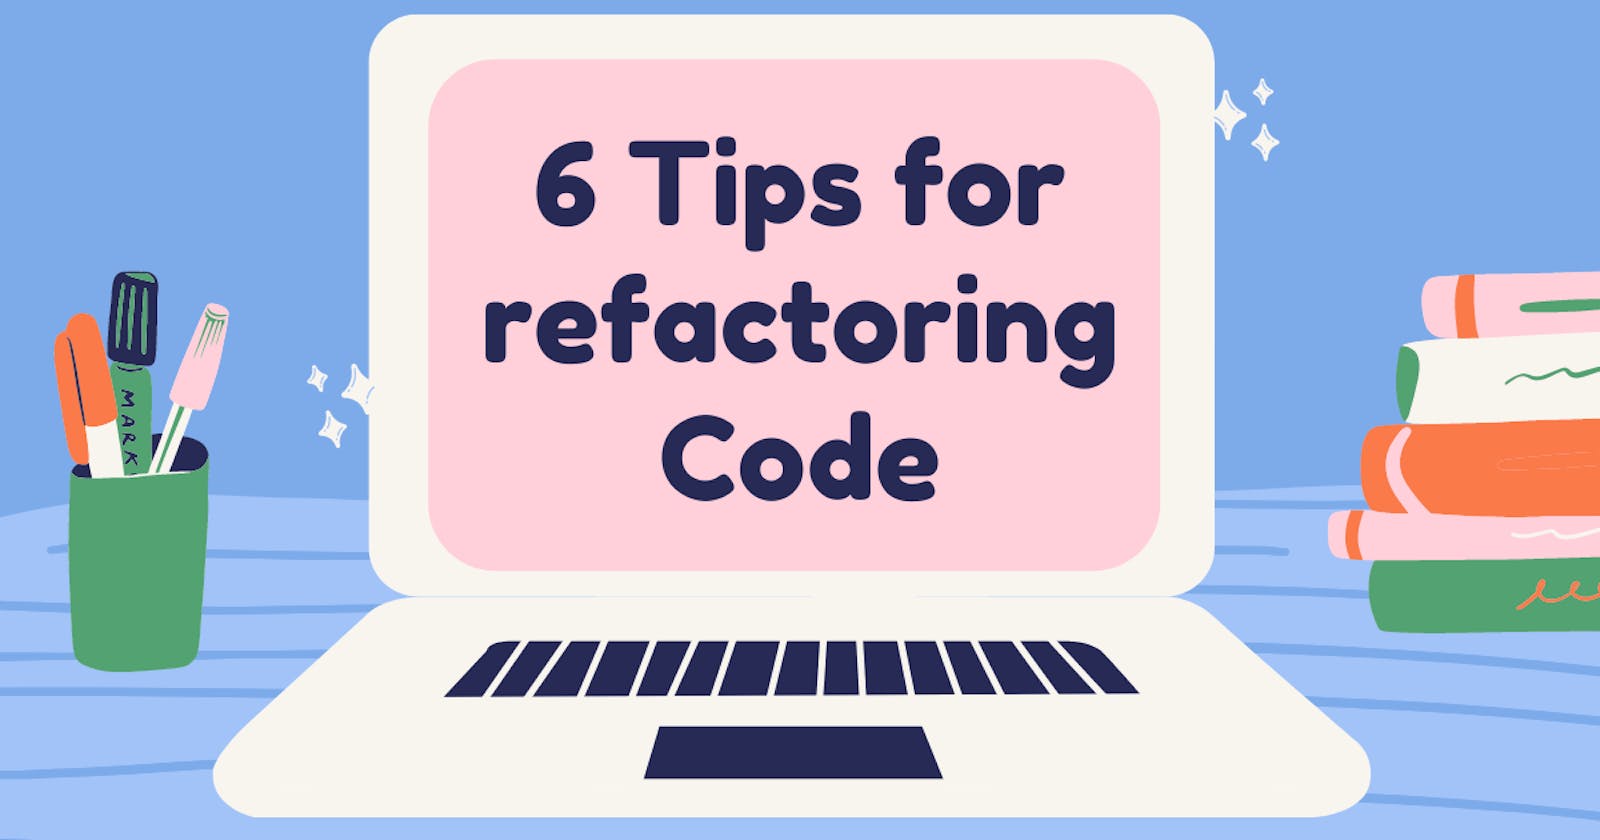 6 Tips for refactoring Code